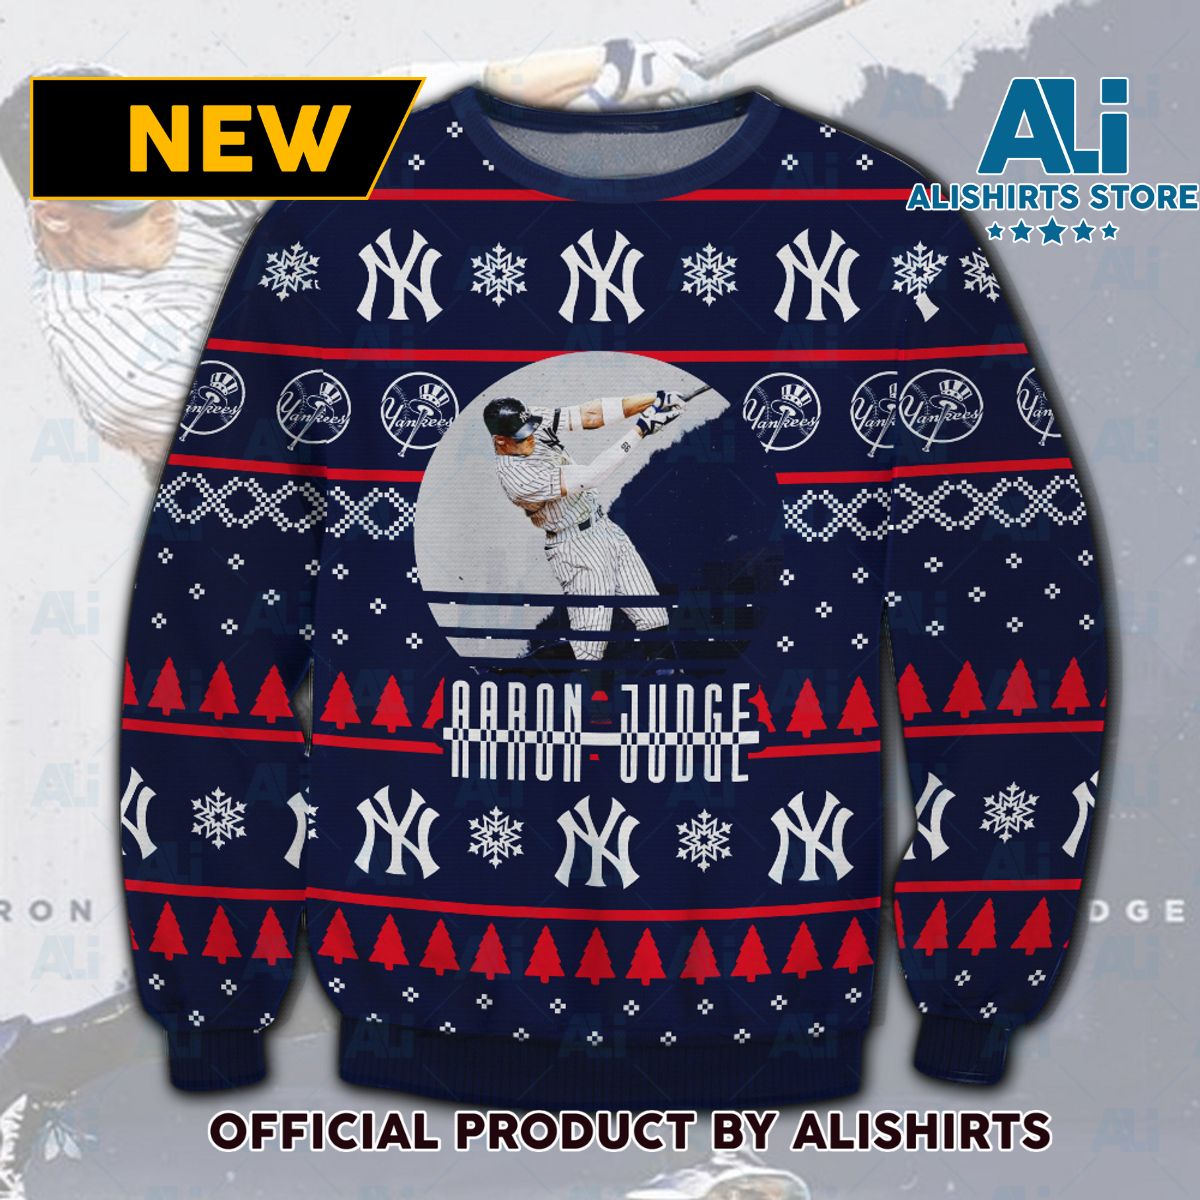 Aaron Jugde New York Yankees Ugly Sweater